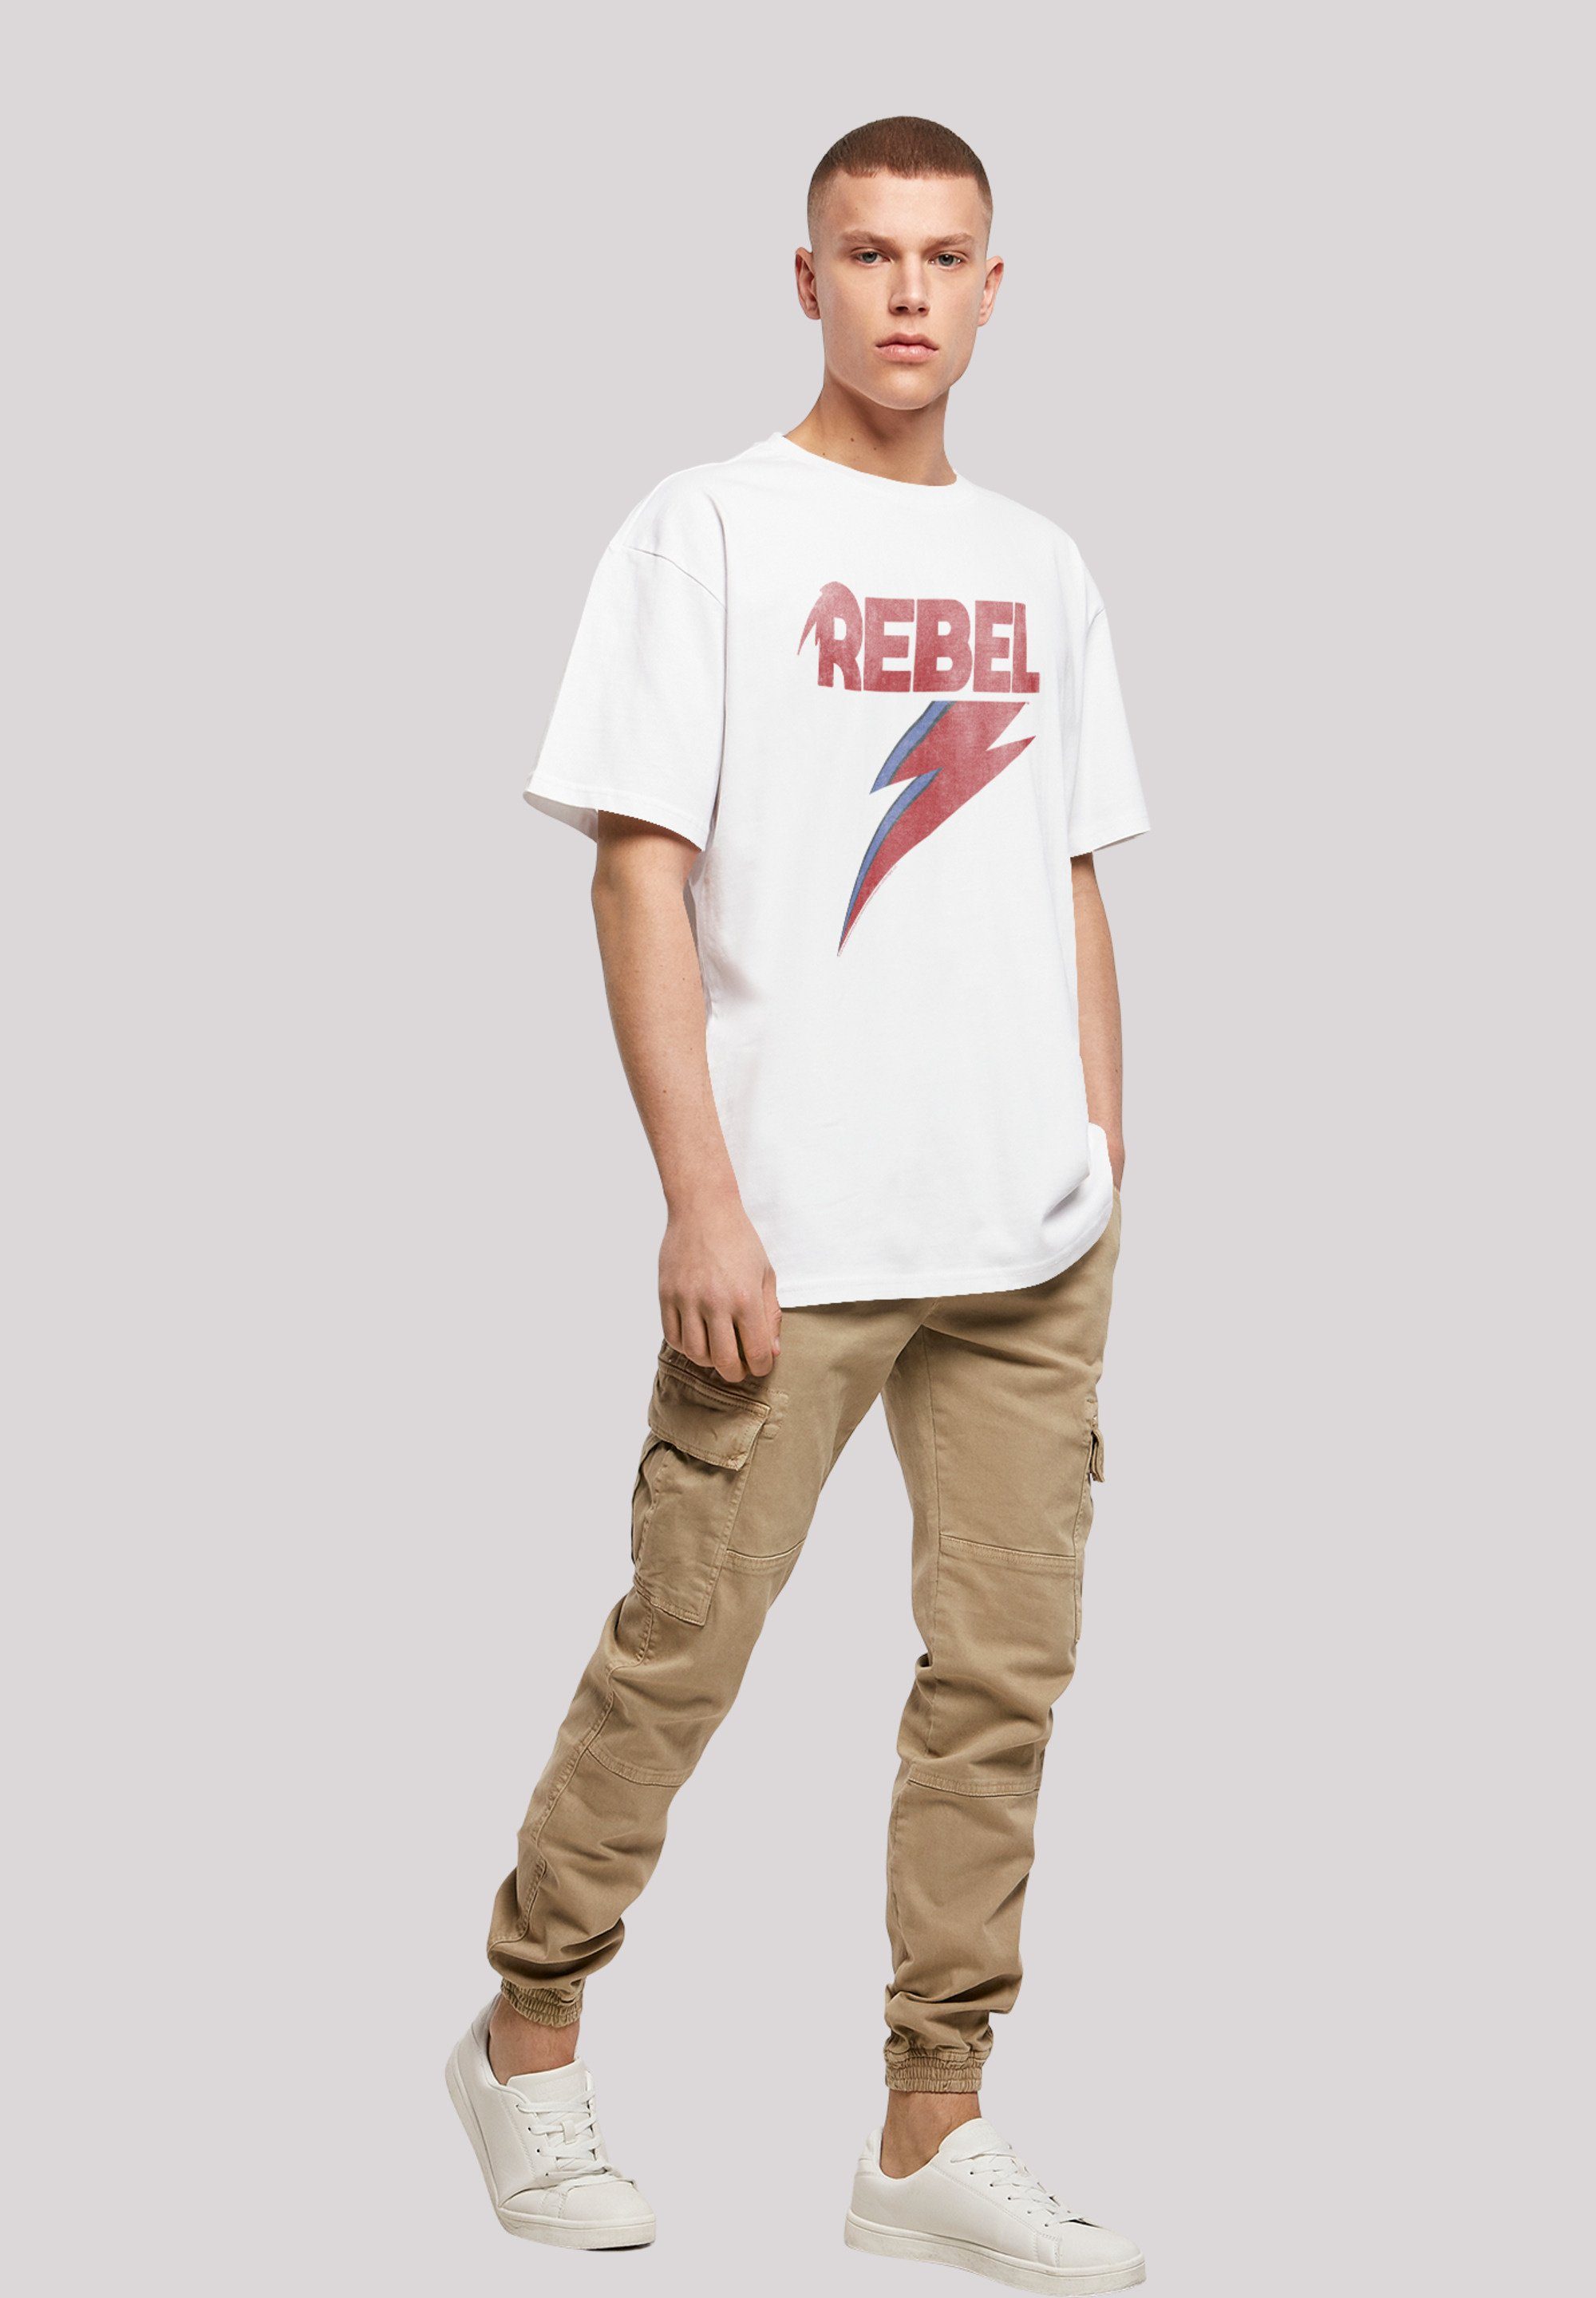 Print David Band T-Shirt Rock Distressed Rebel Music weiß Bowie F4NT4STIC